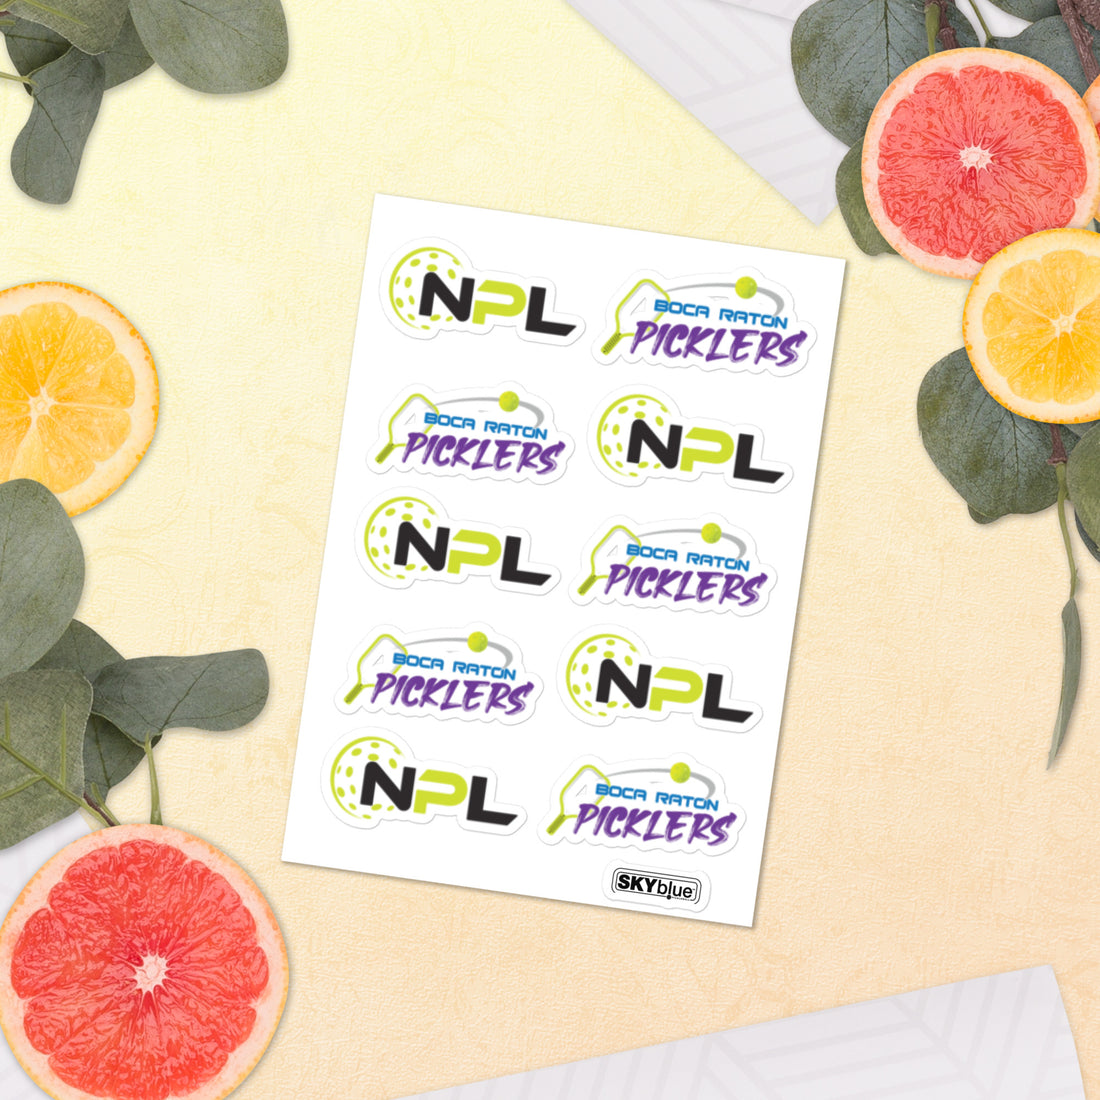 Boca Raton Picklers™ & NPL™ Pickleball Stickers - Show Your Pride!